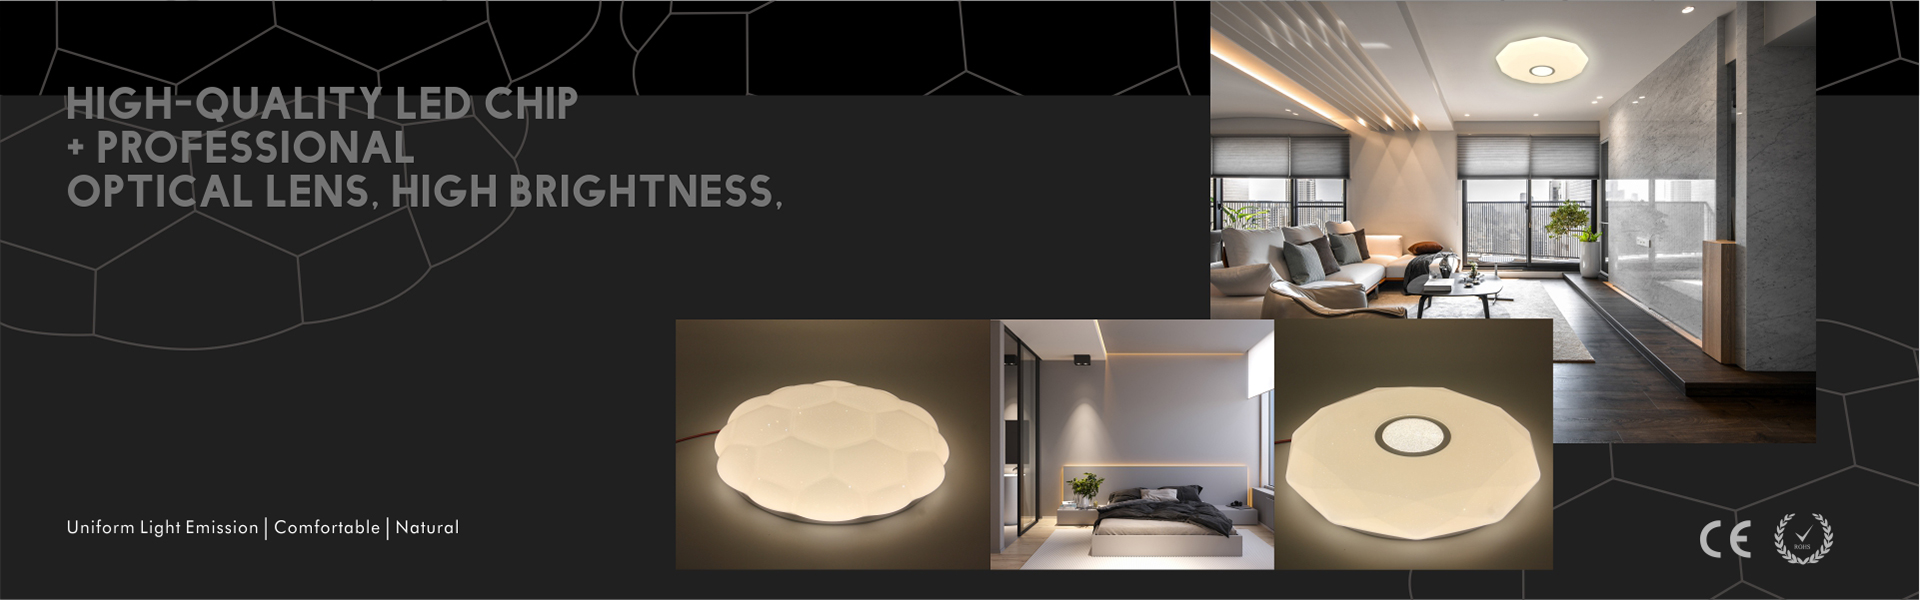 LED λαμπτήρας οροφής, εσωτερική λάμπα, έξυπνη λάμπα οροφής,GUANGDONG LESSO LIGHTING CO .，LTD